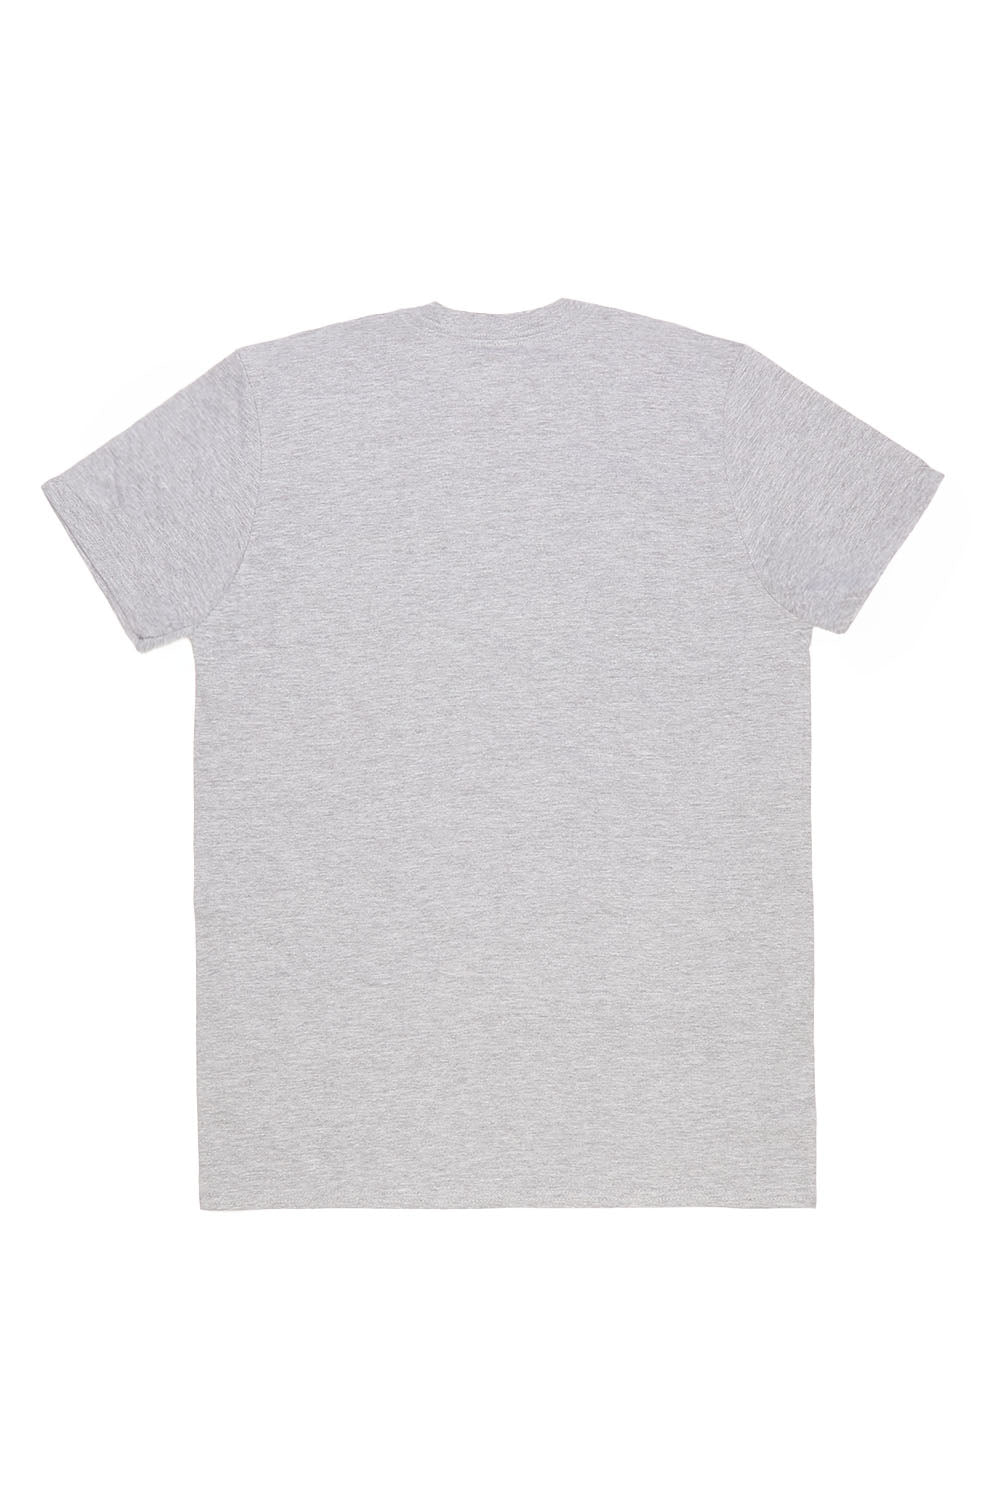 Beverly Hills T-Shirt in Ash Grey (Custom Packs)